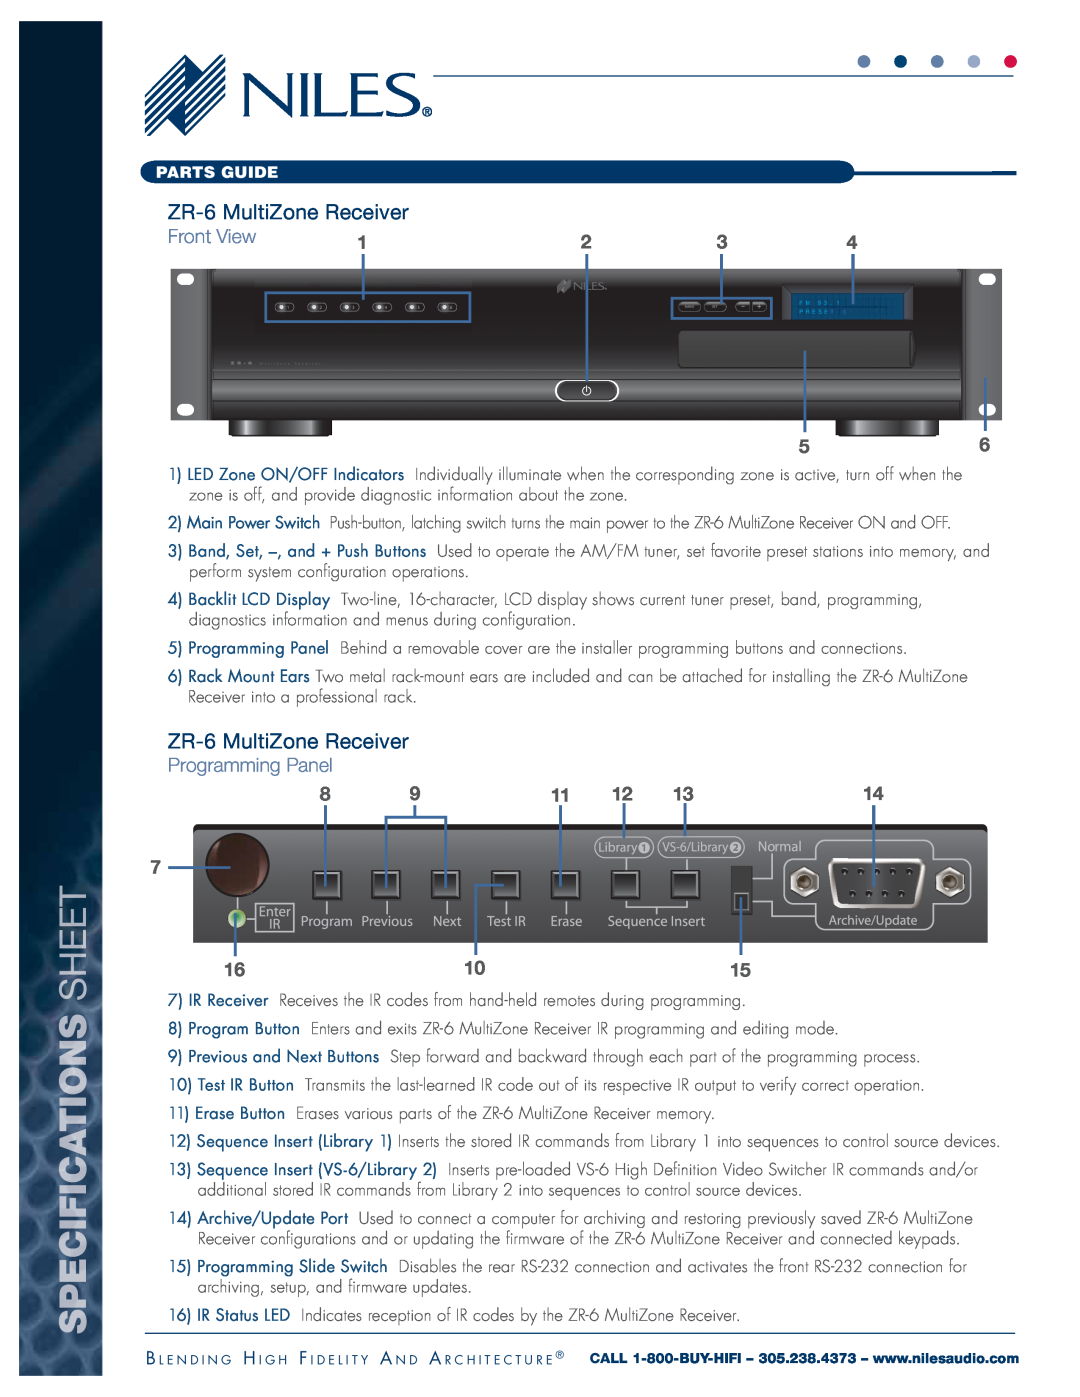 Niles Audio manual ZR-6MultiZone Receiver, Programming Panel, Specifications Sheet 